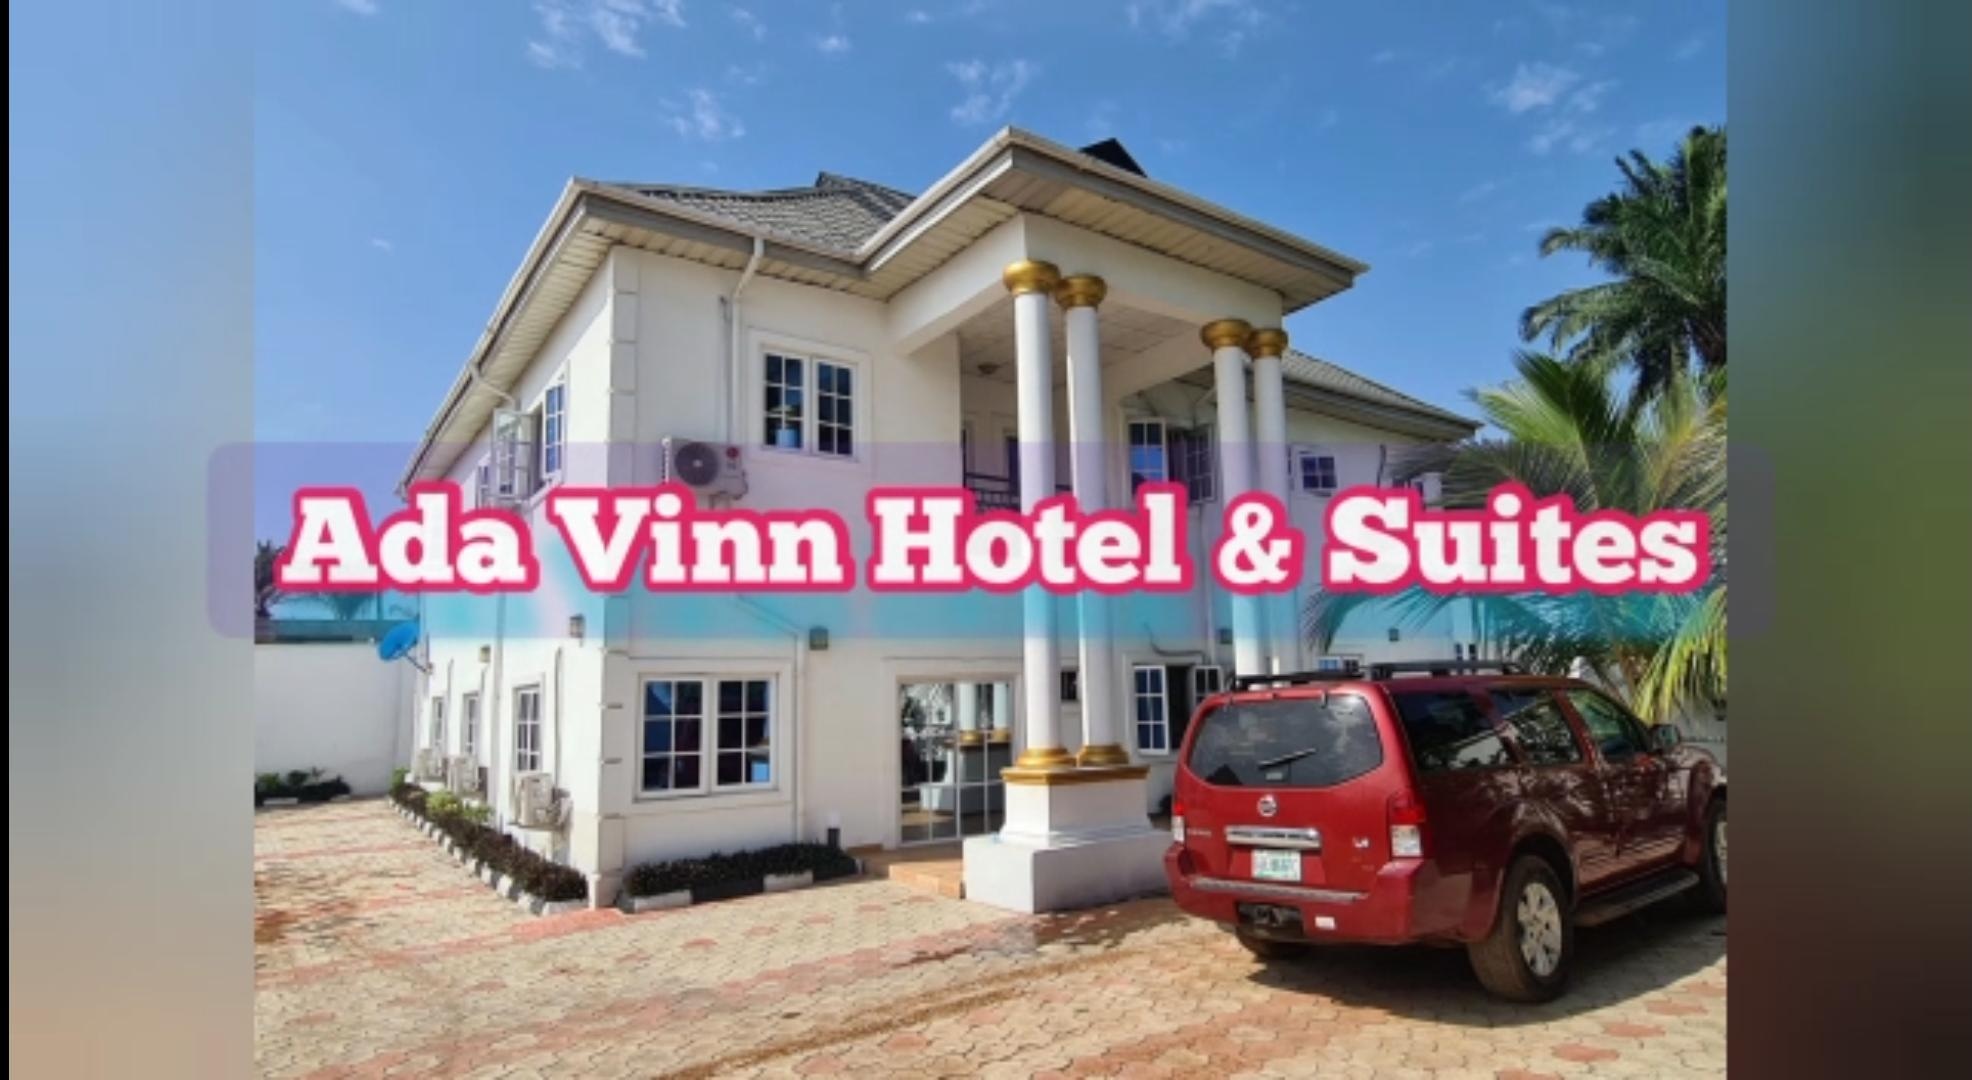 Ada-Vinn Hotel And Suites: Hospitality At Its Peak